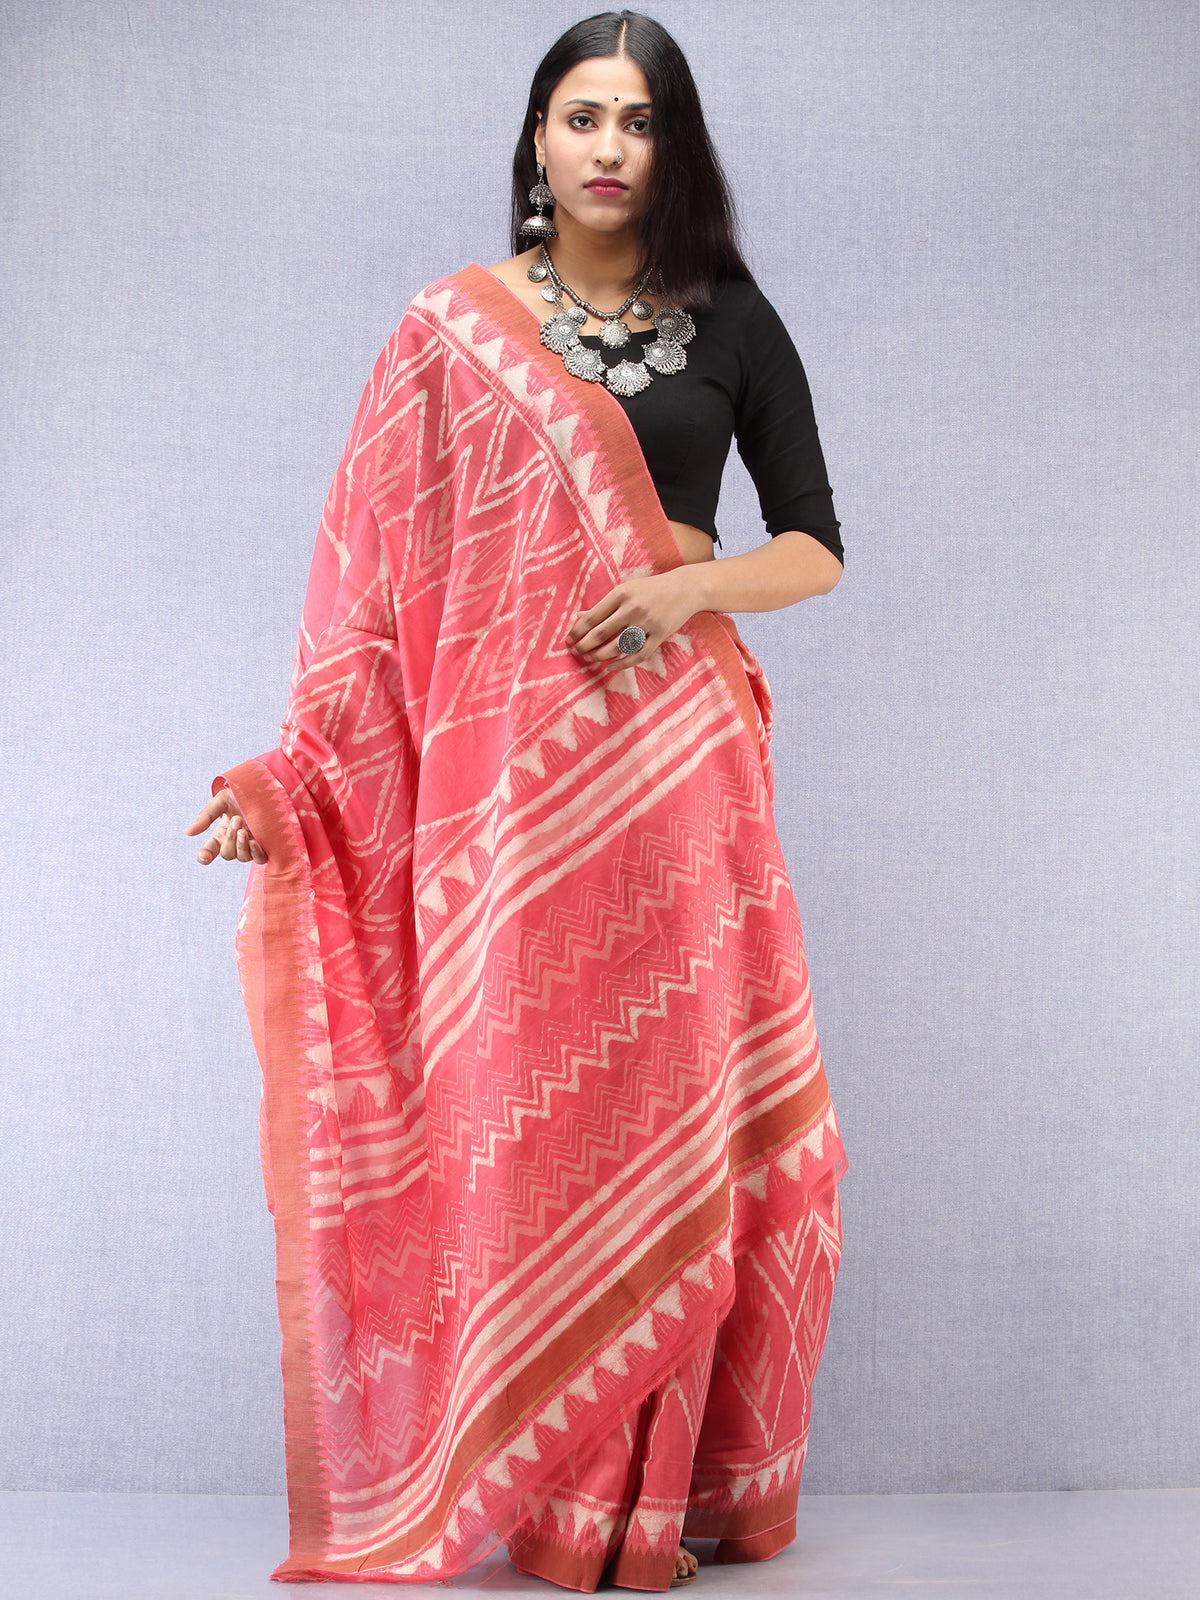 Pink Ivory Hand Block Printed Chanderi Saree With Zari Border - S031704536